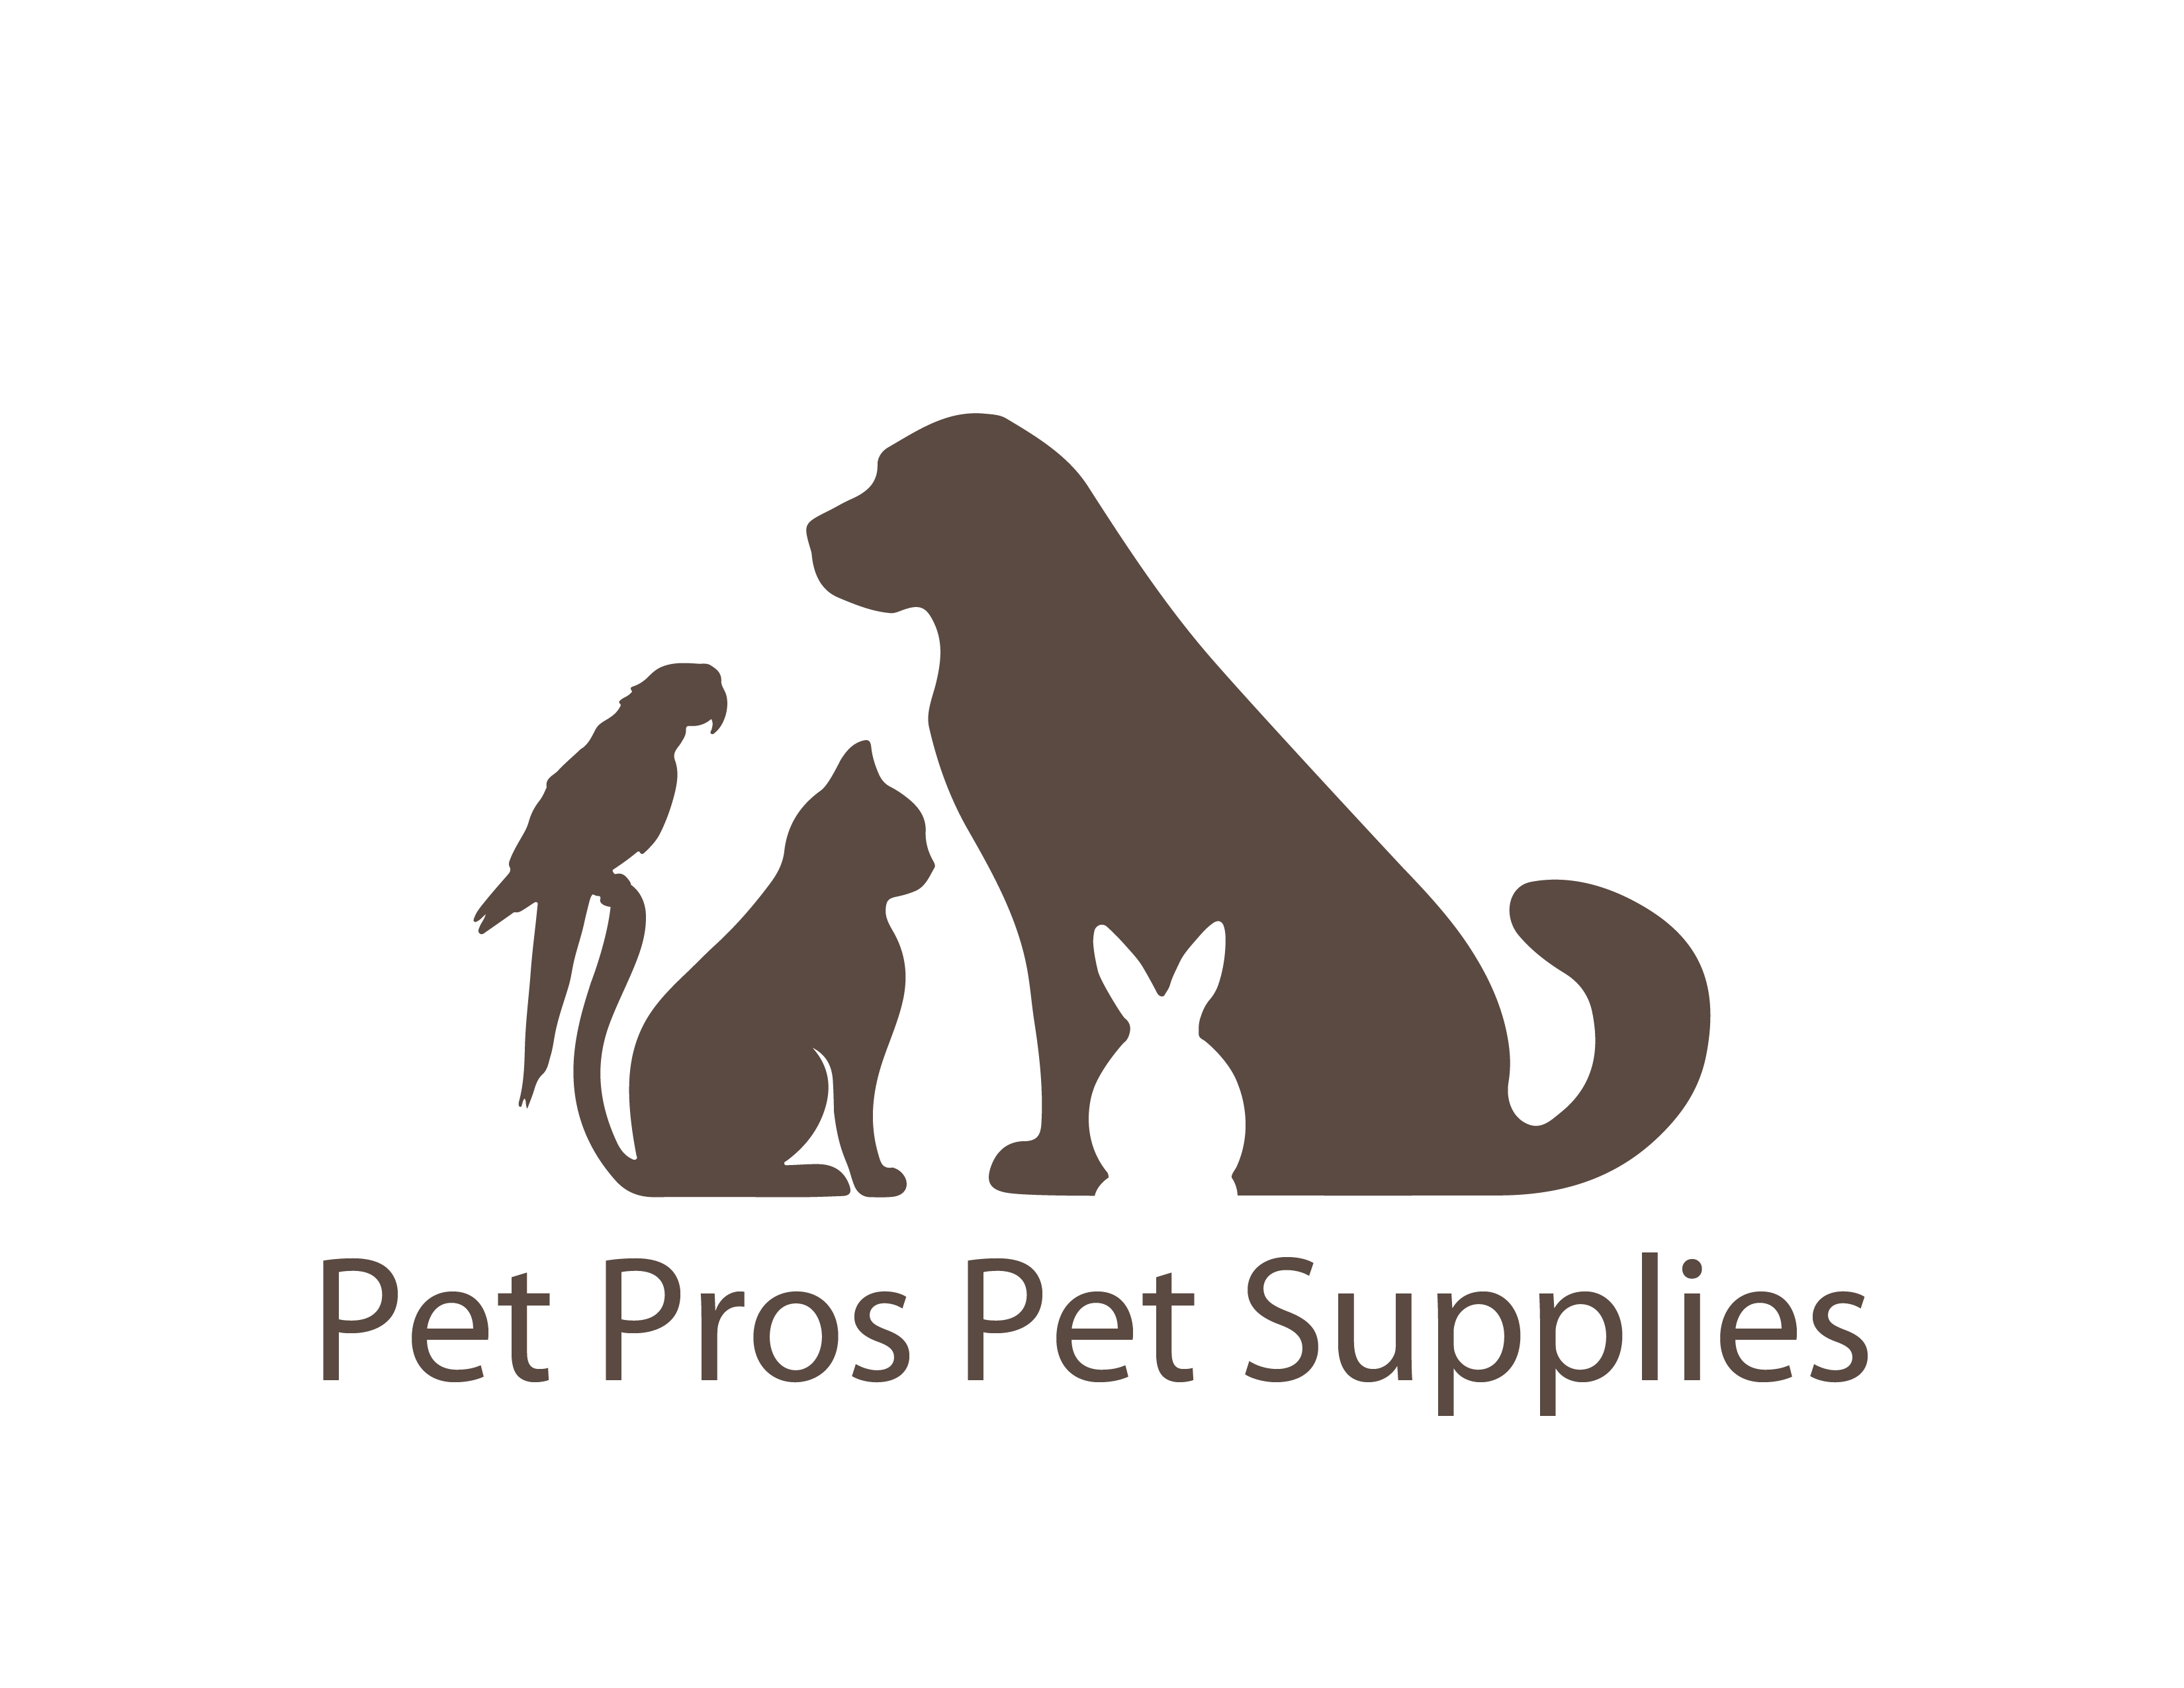 Give a talk about pets. Логотип зоомагазина. Логотипы товаров для животных. Логотип животные. Логотип магазина товаров для животных.